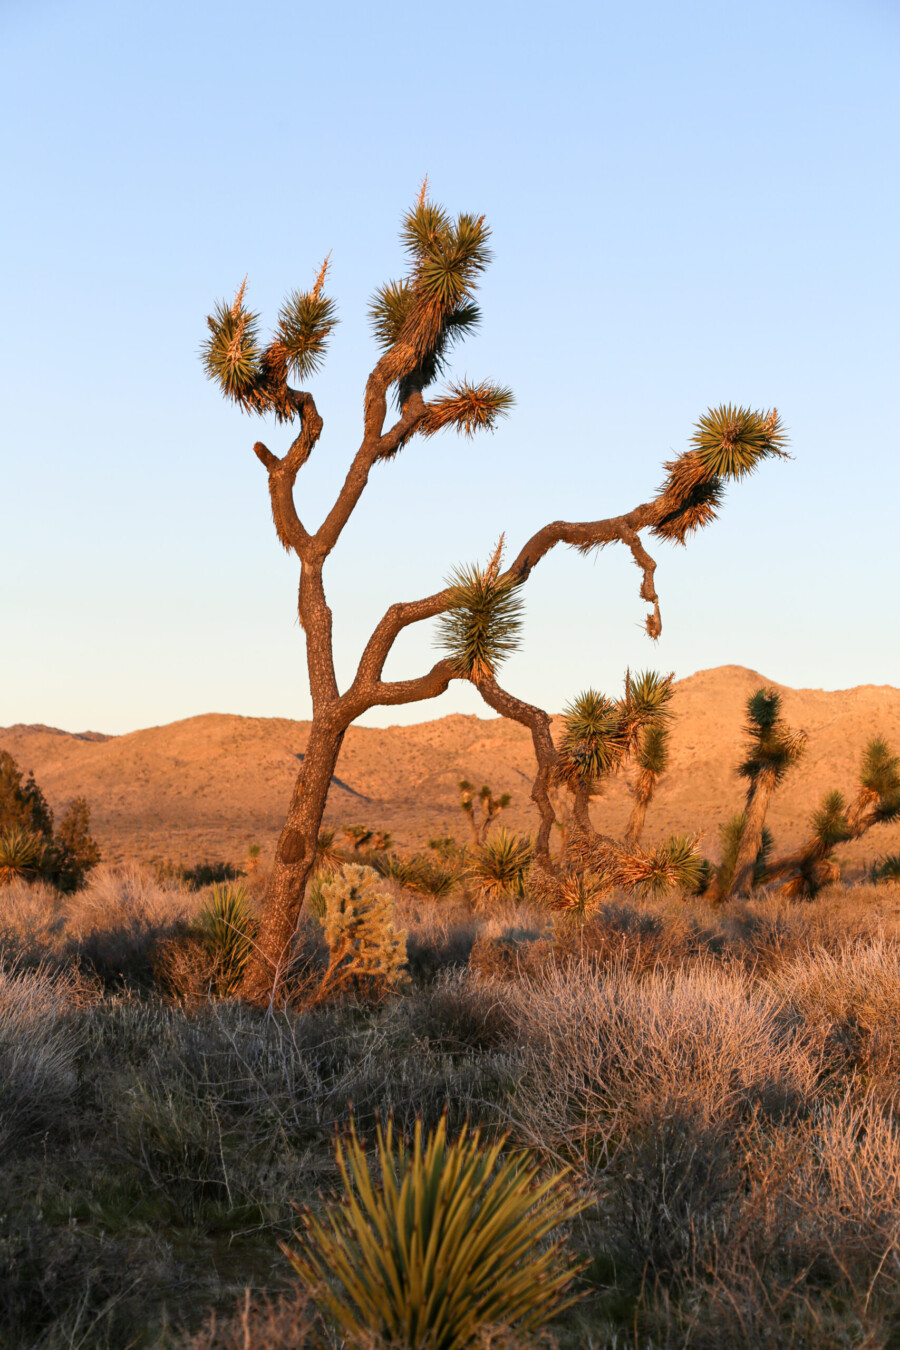 Golden hour photo of a landscape featuring a Joshua Tree near Joshua Tree National Park, California.